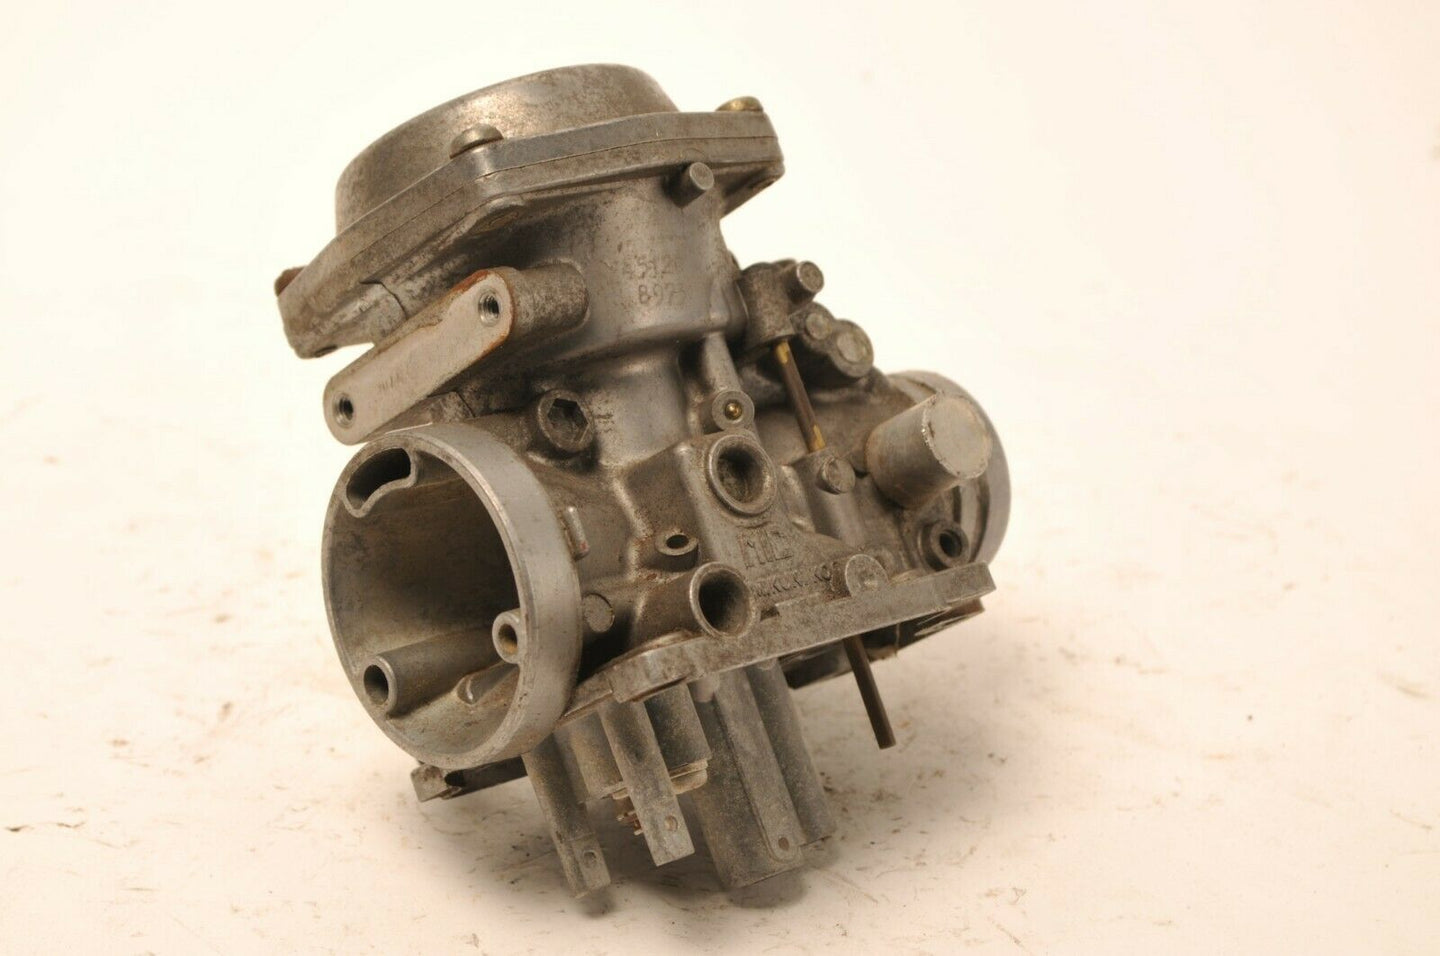 Used Motorcycle Carb Carburetor - Mikuni - 45120 8973 Body Incomplete